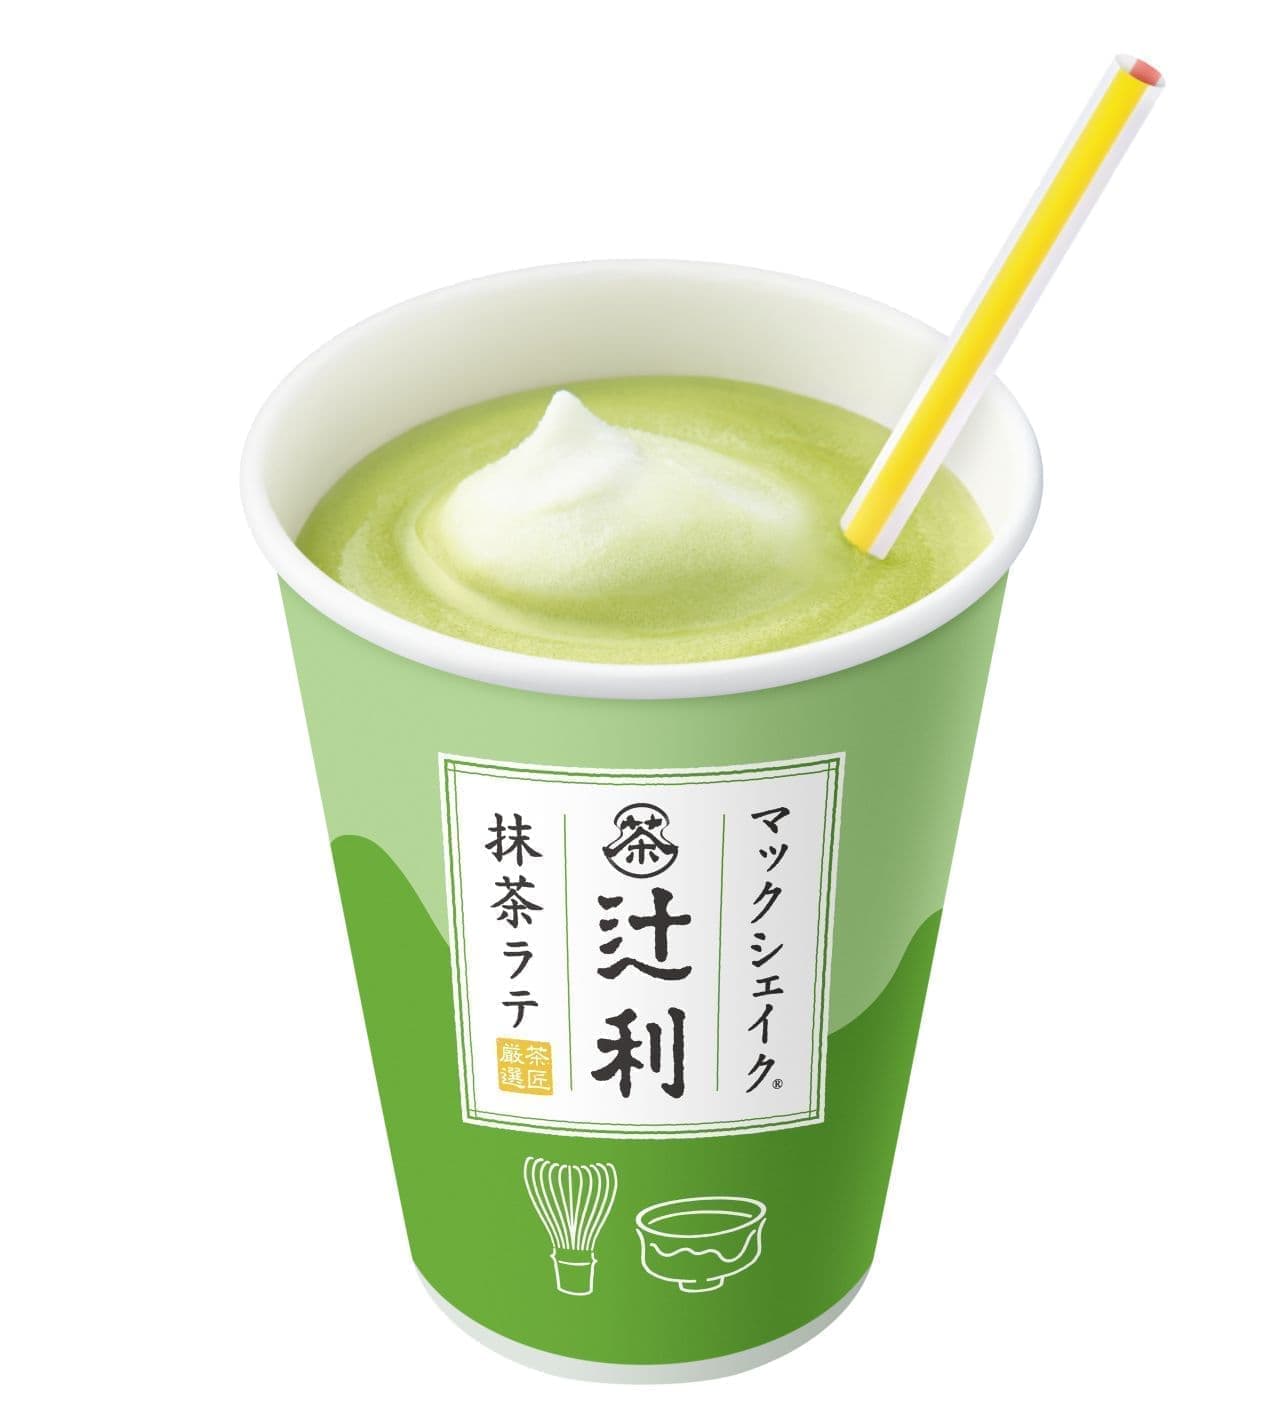 McDonald's "McShake Tsujiri Matcha Latte".